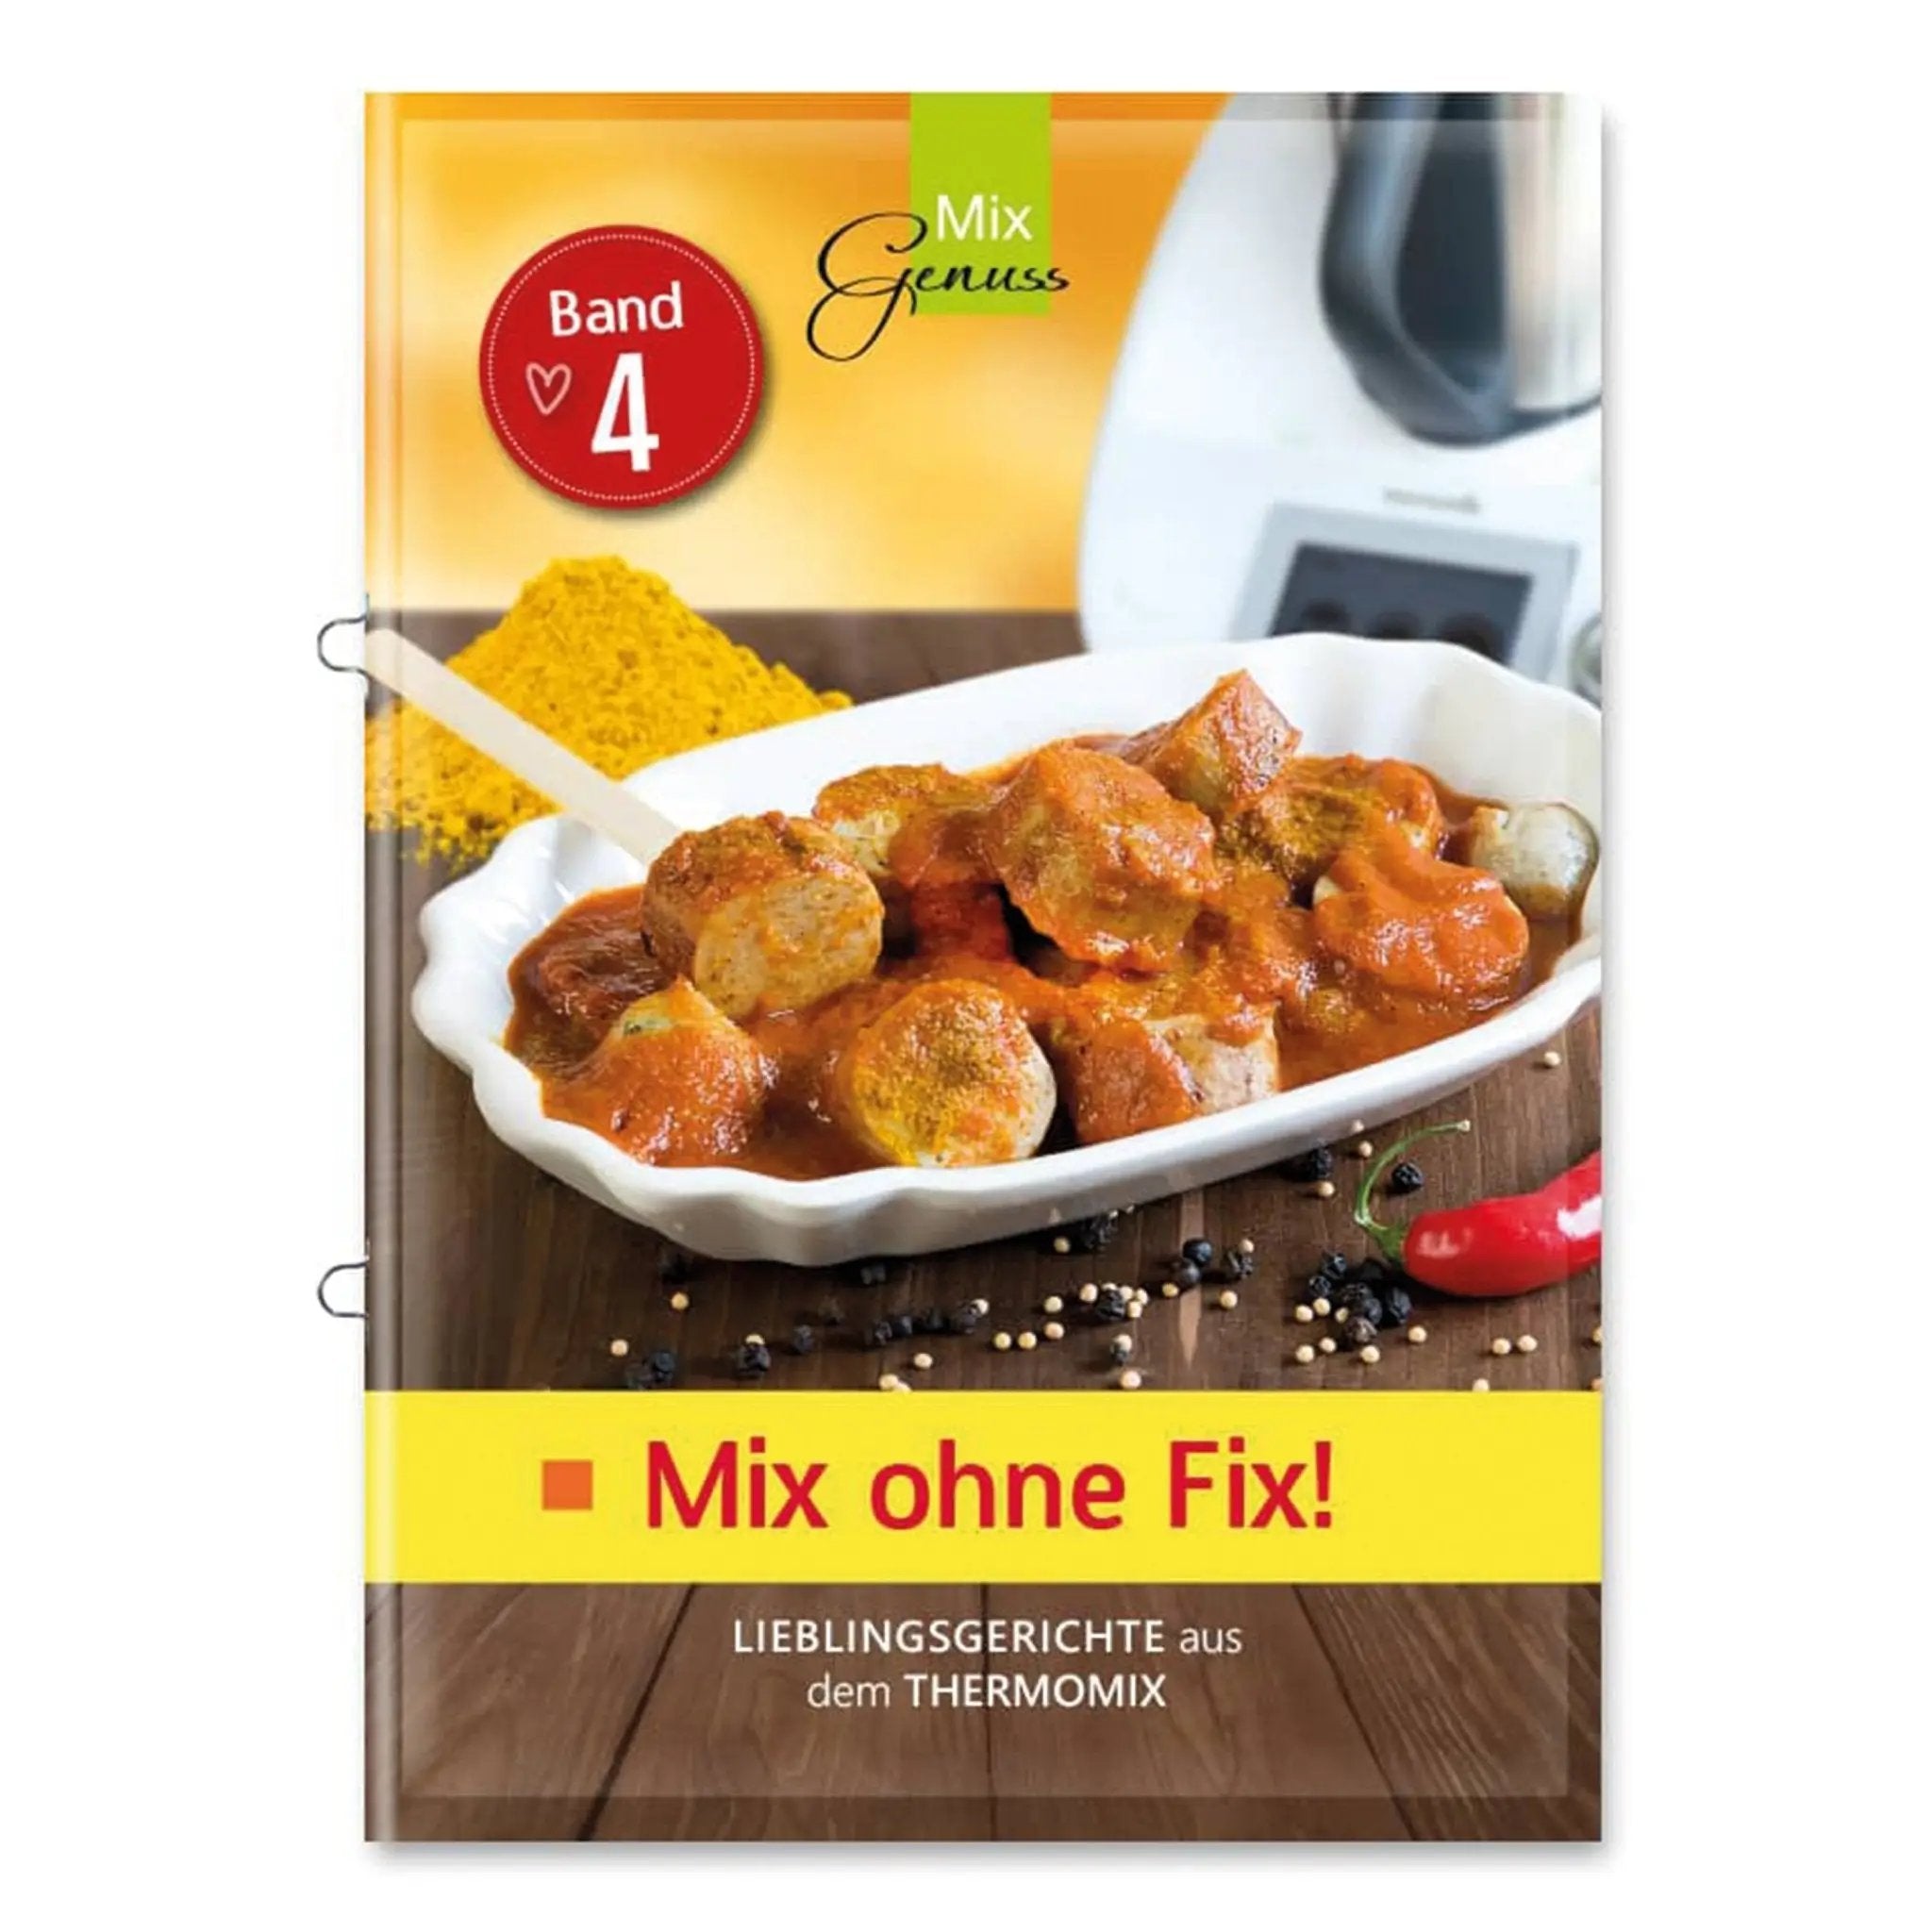 Mix ohne Fix! | Band 4 - Wundermix GmbH